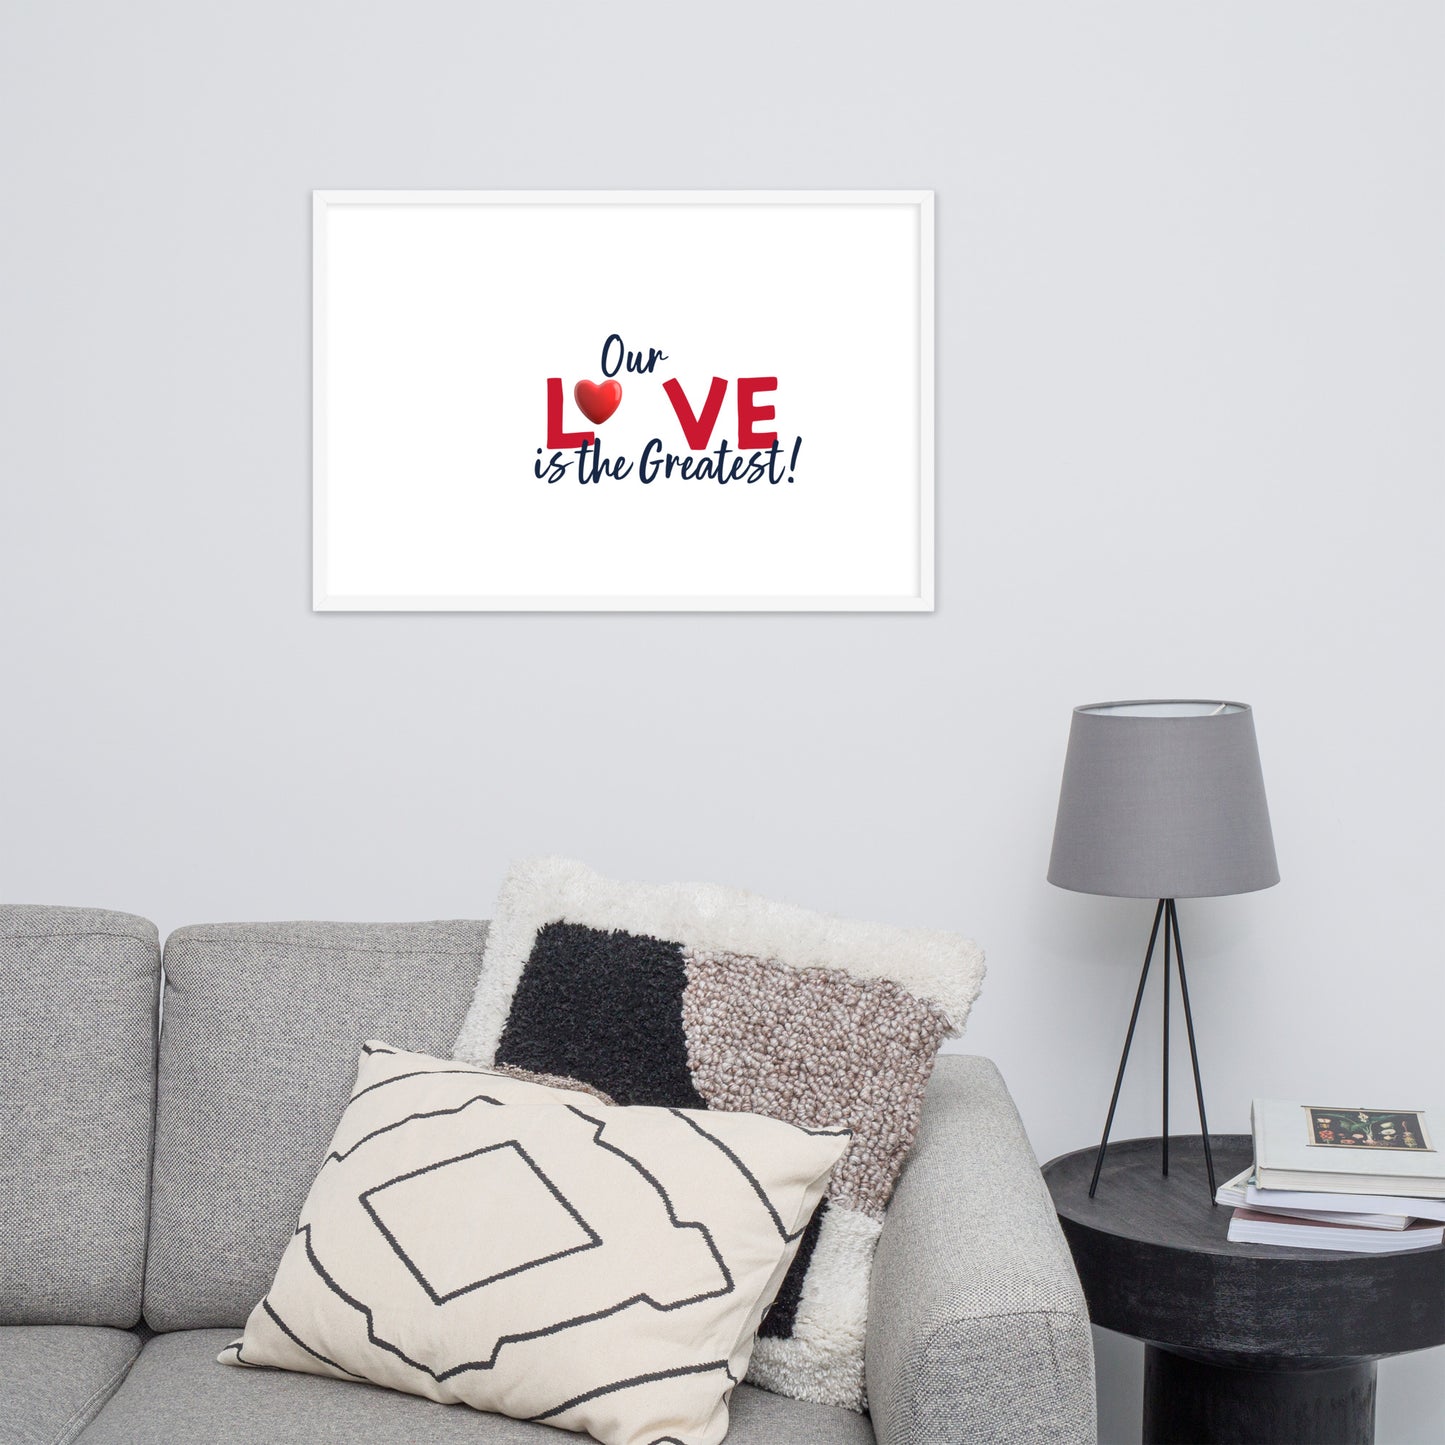 Framed Poster (Our Love is the Greatest! - Love Framed Poster Horizontal Model 006)